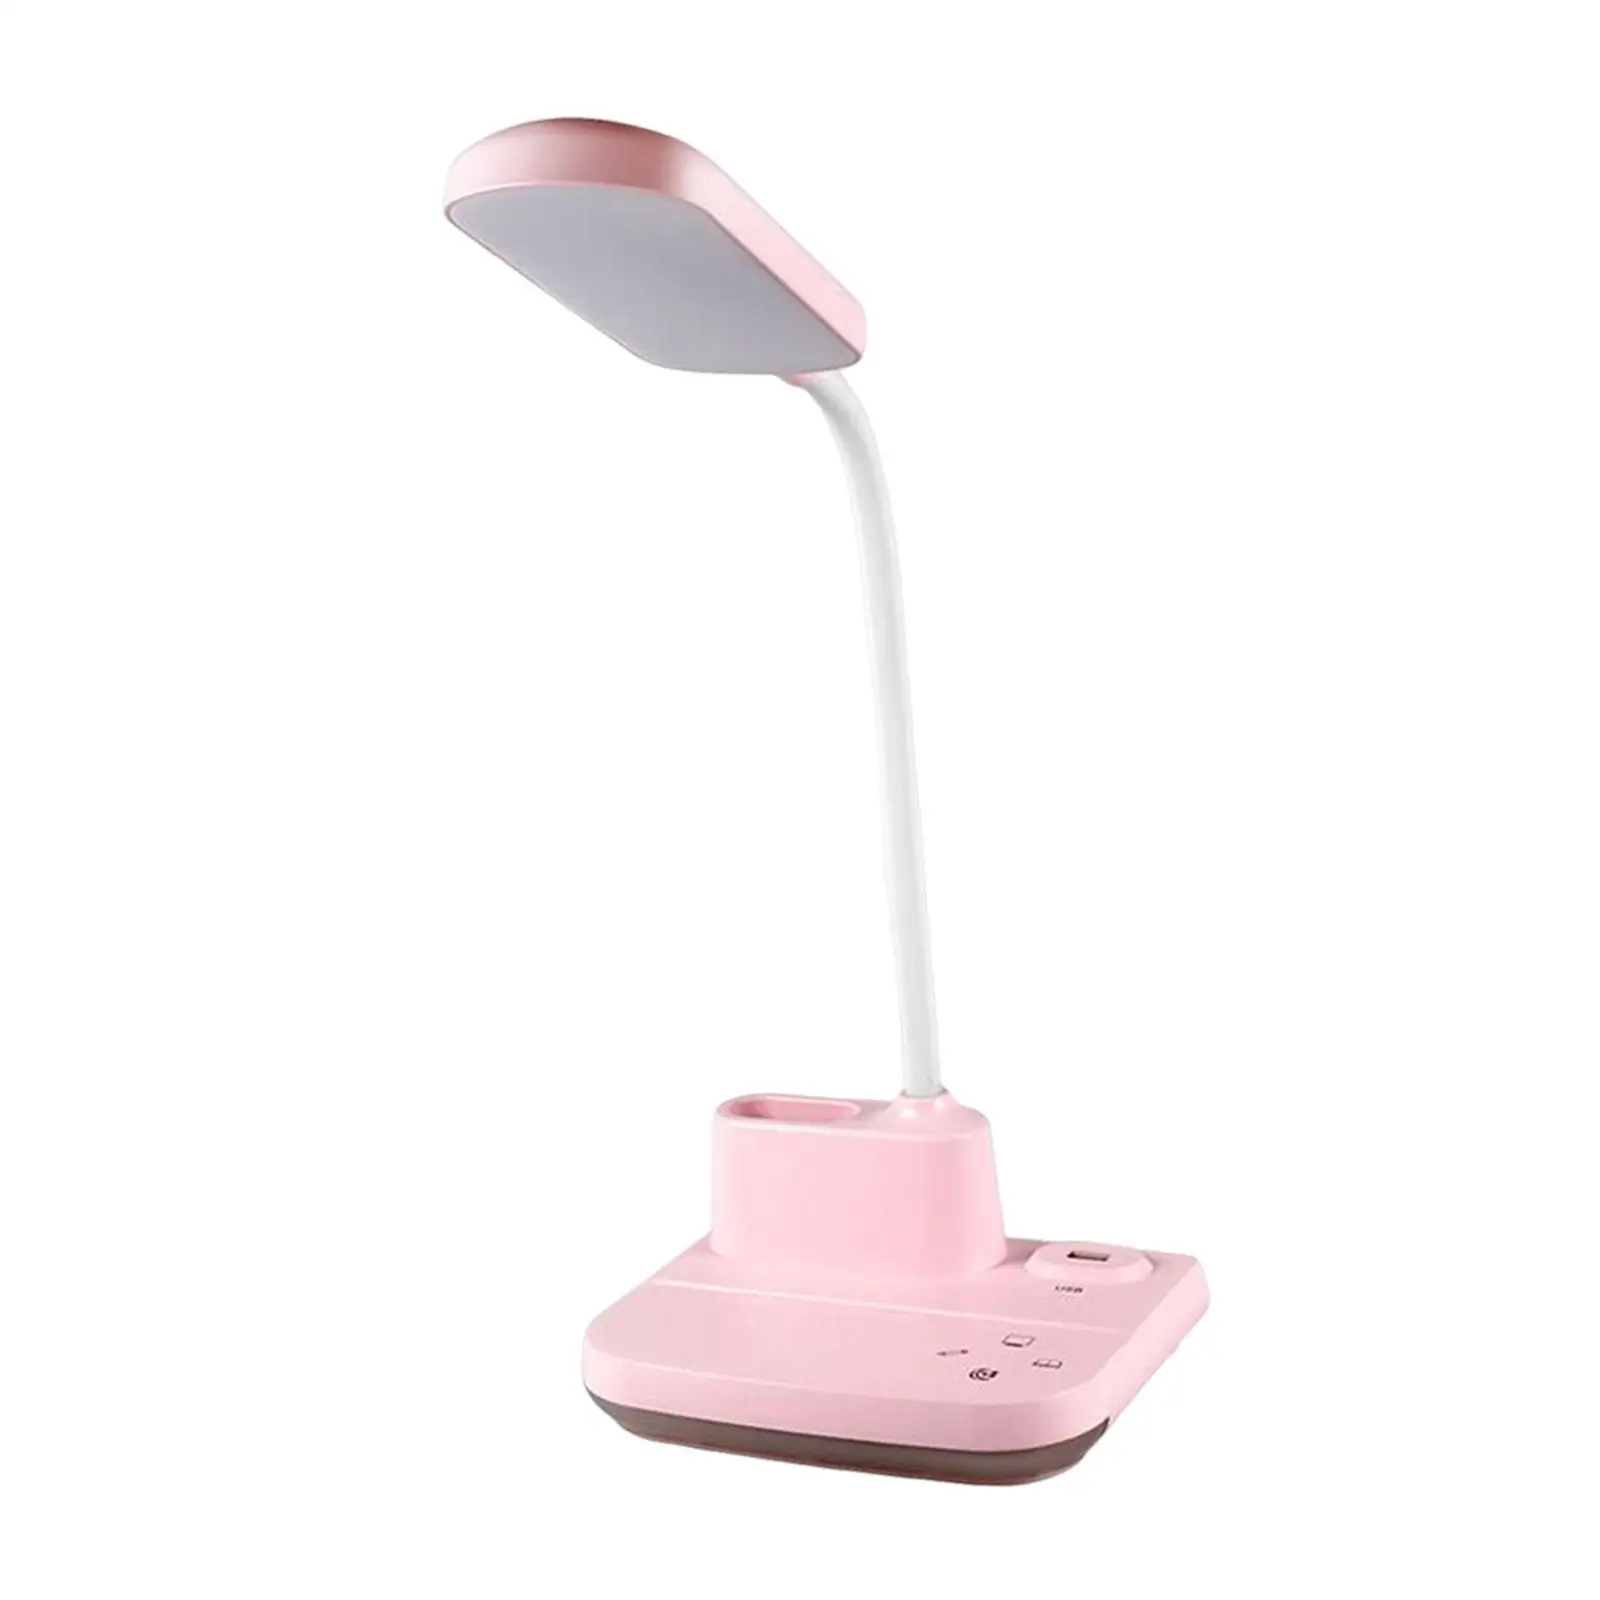 LED Desk Lamp Touch Control Small Desk Light for Home Study Room Desktop